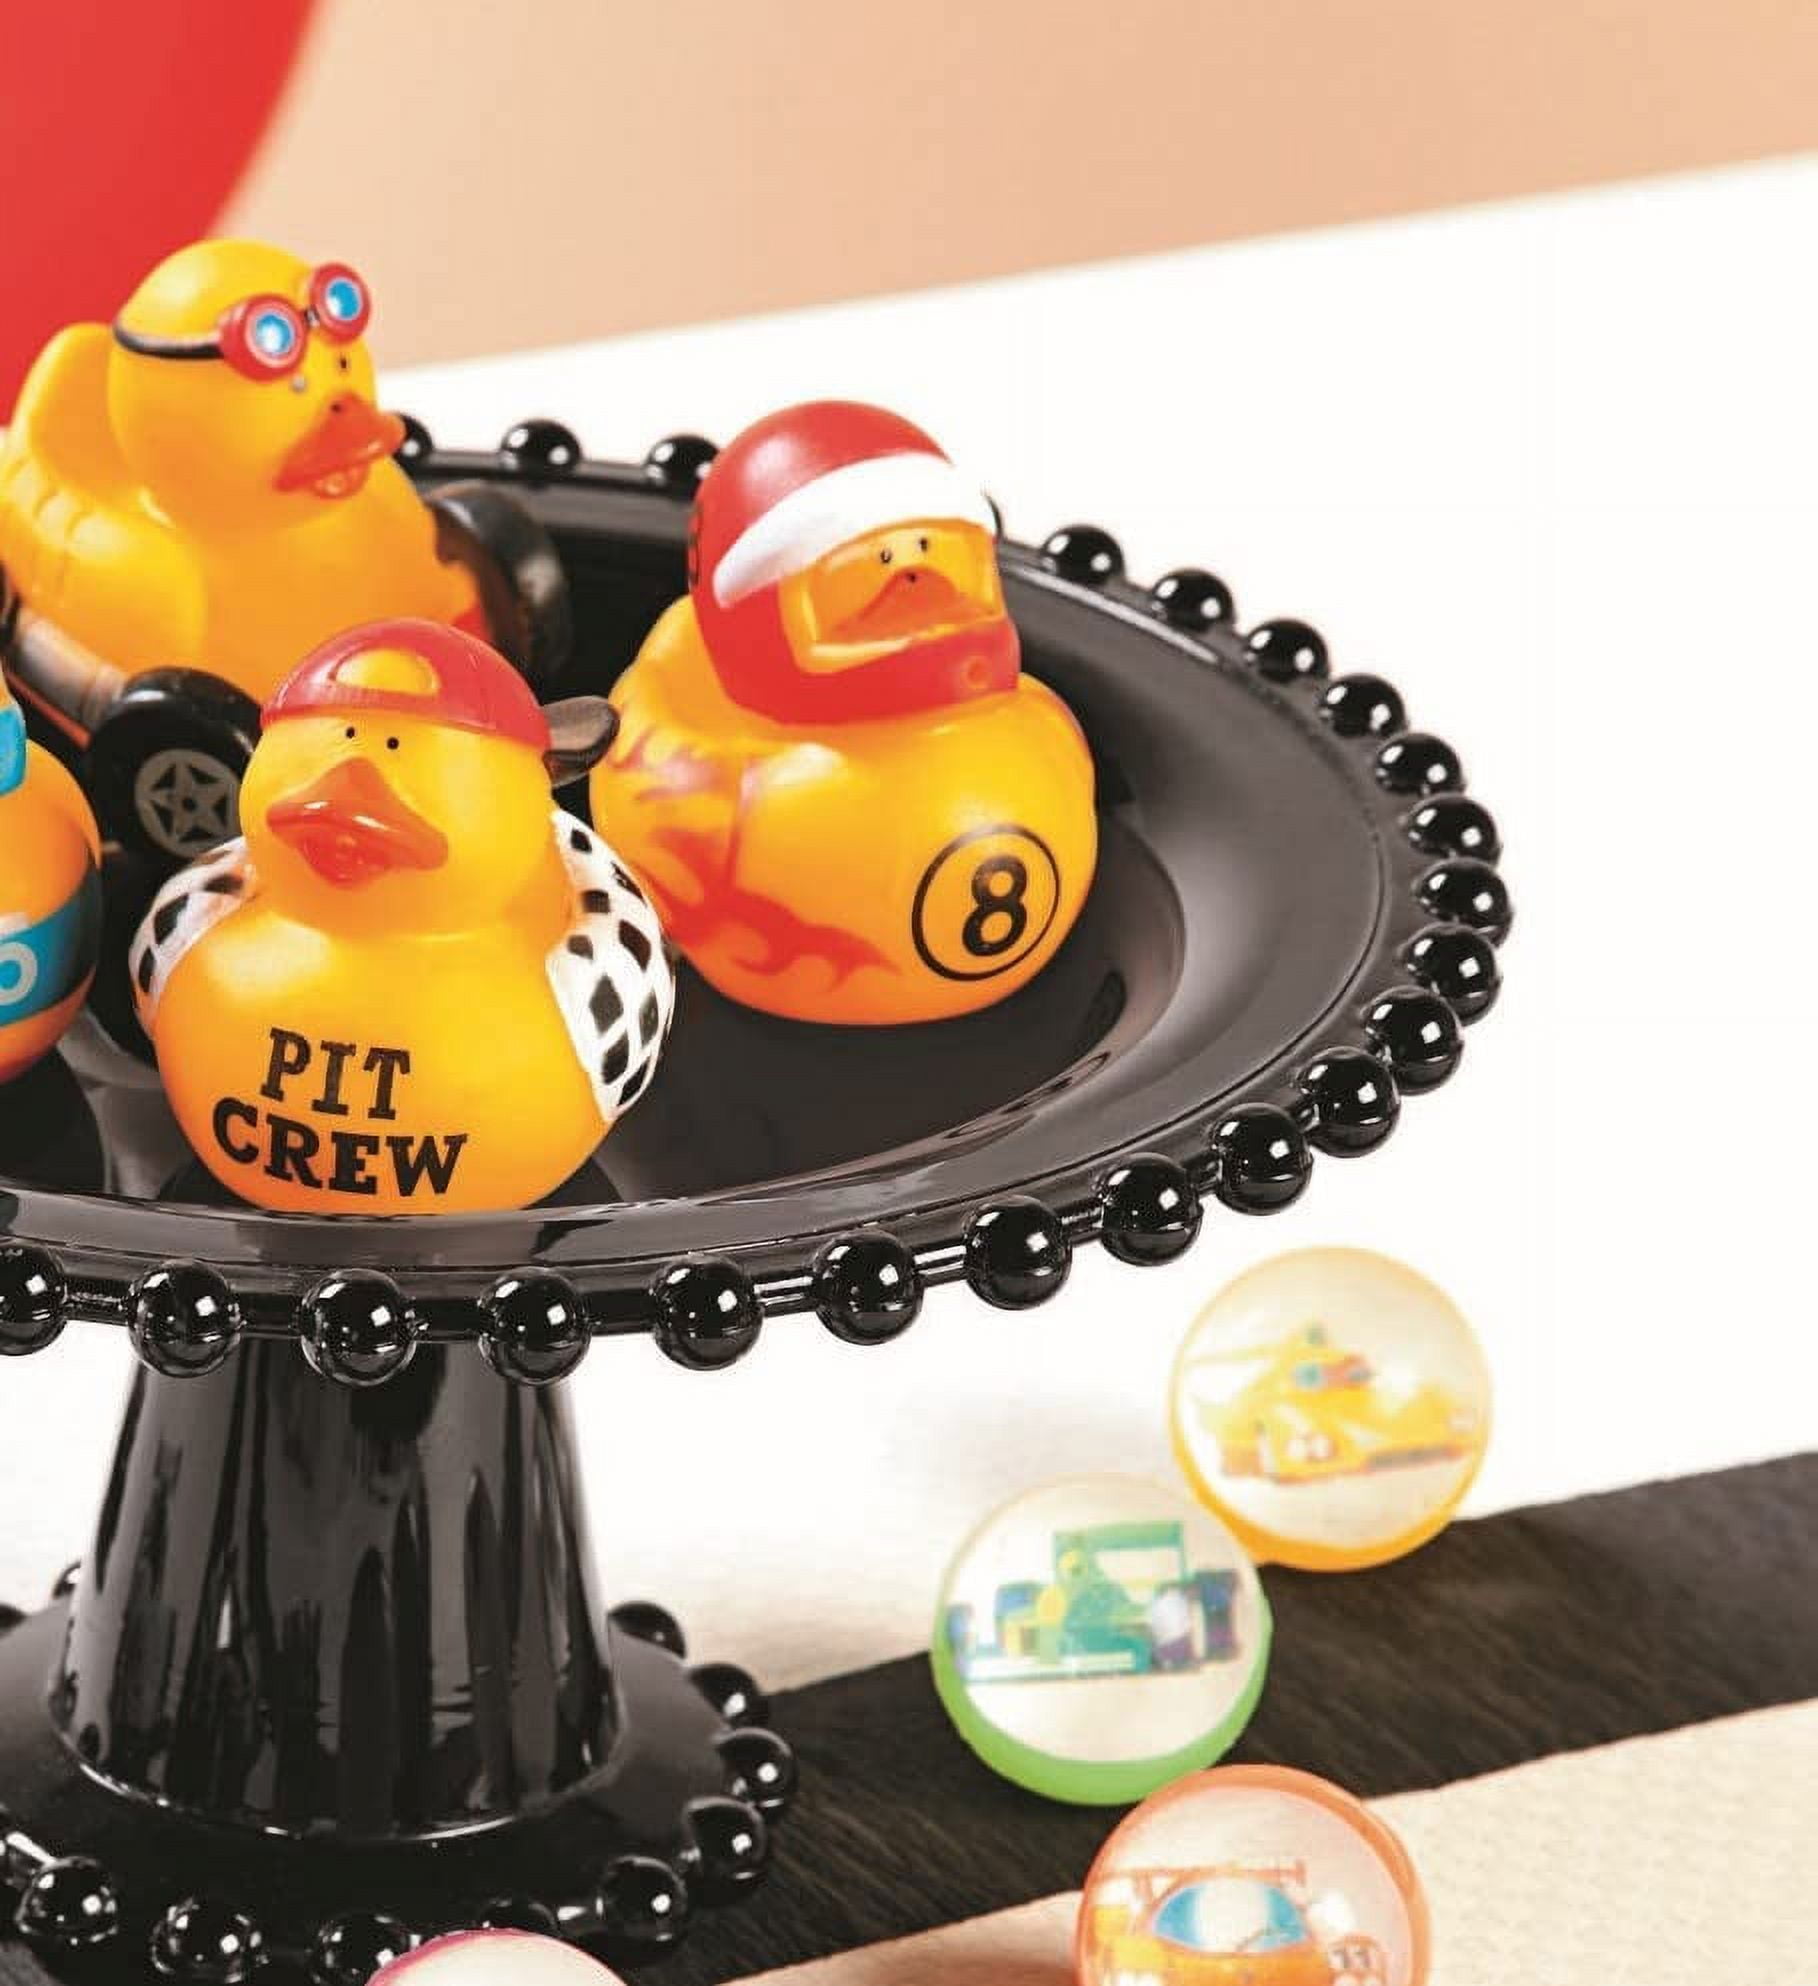 Fun Express Mini Neon Colored Rubber Duckies 24 Ducks Bulk Giveaway